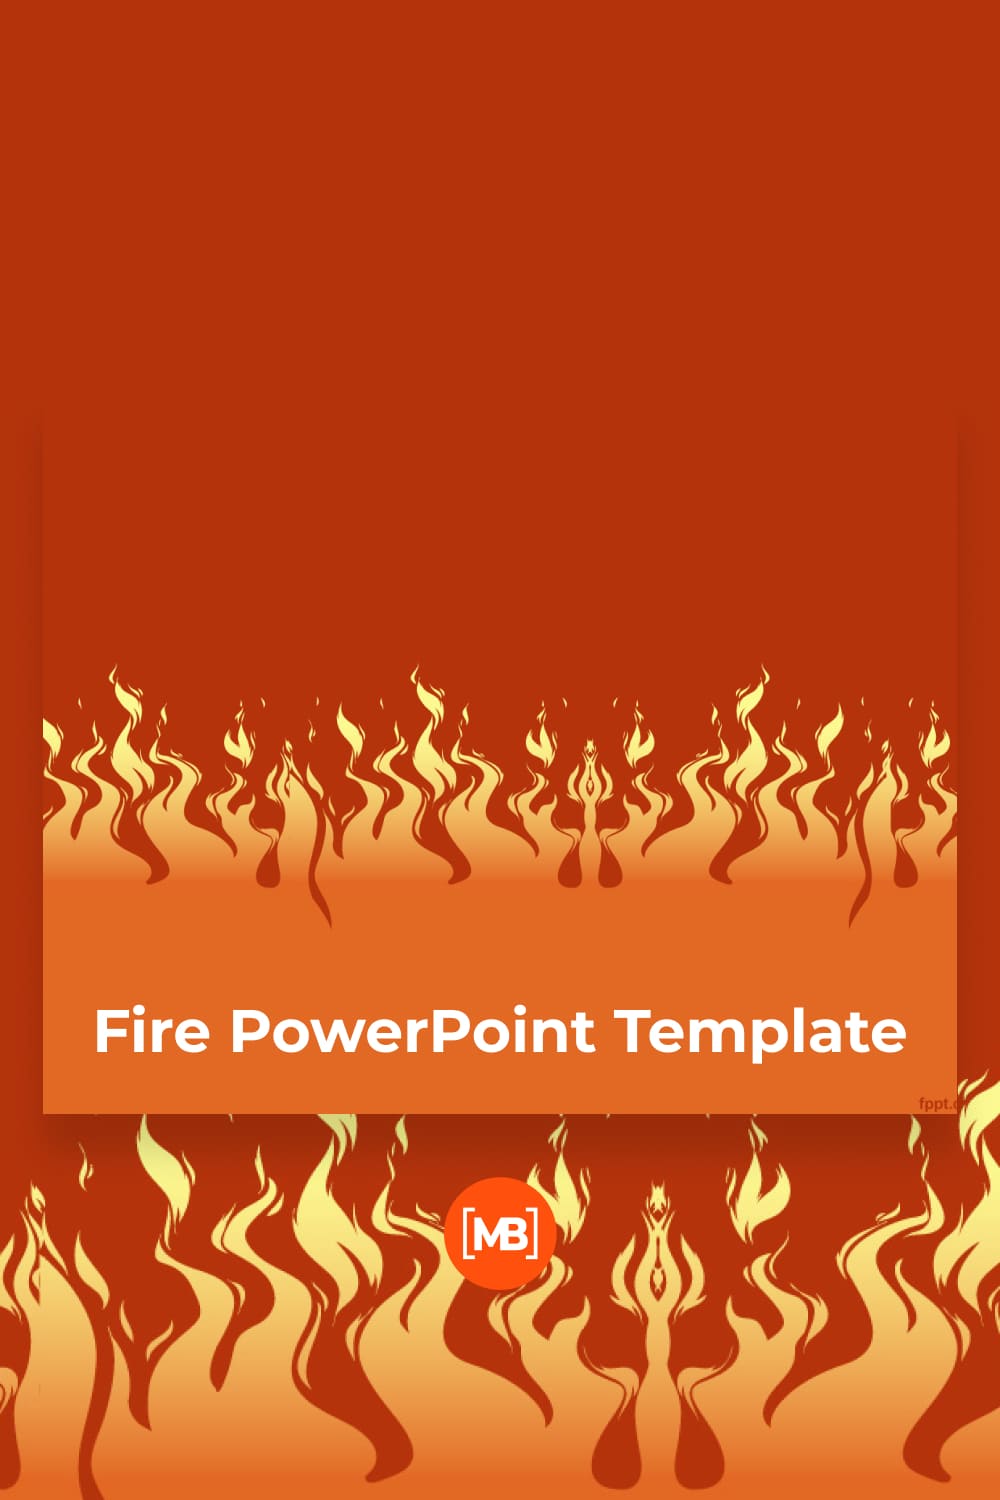 Fire powerpoint template.